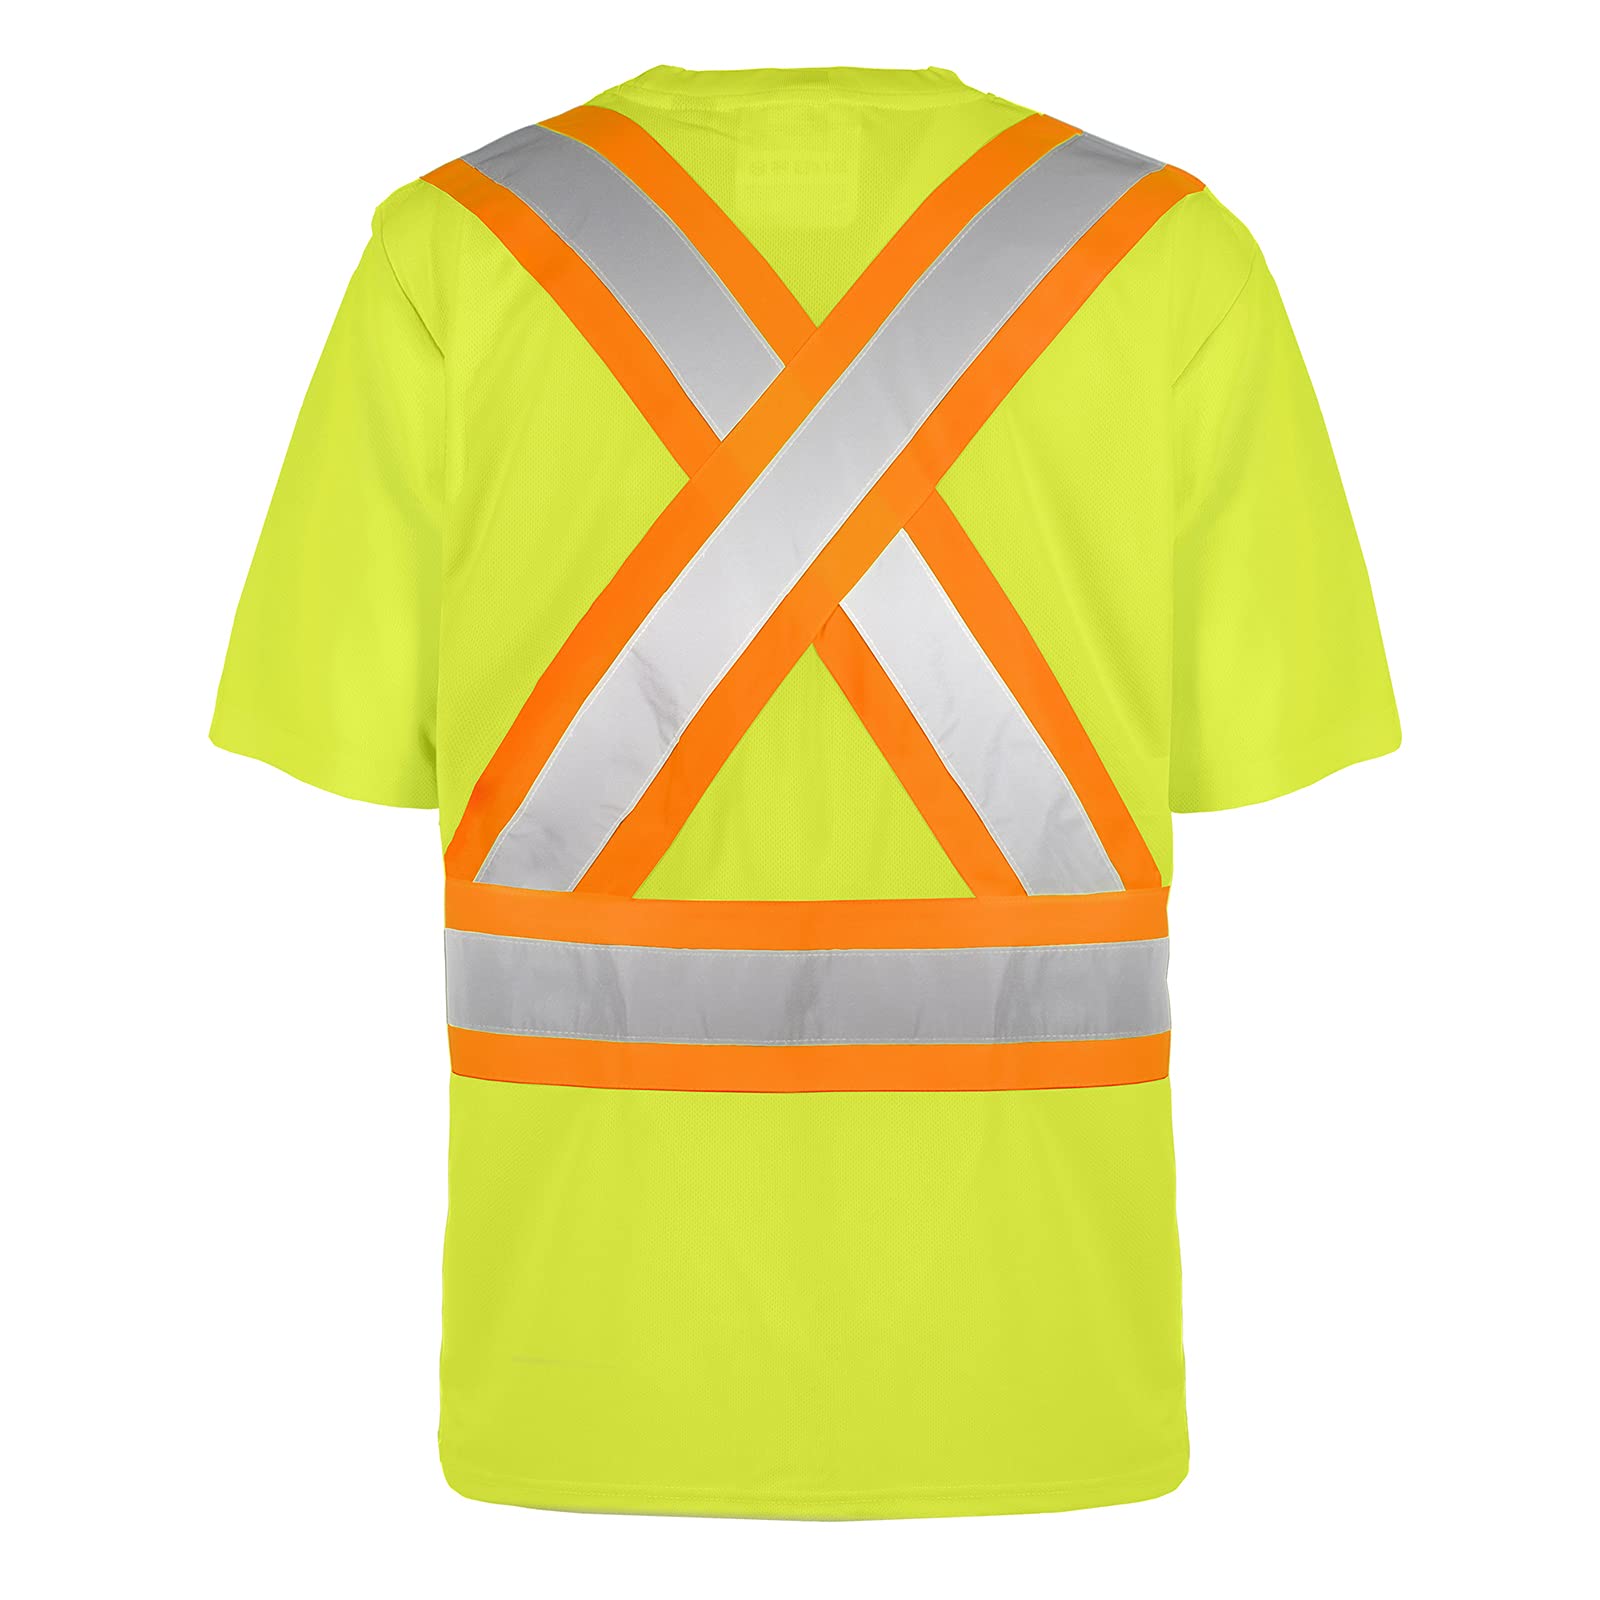 Dickies mens Workwear T shirt, Yellow, X-Large US